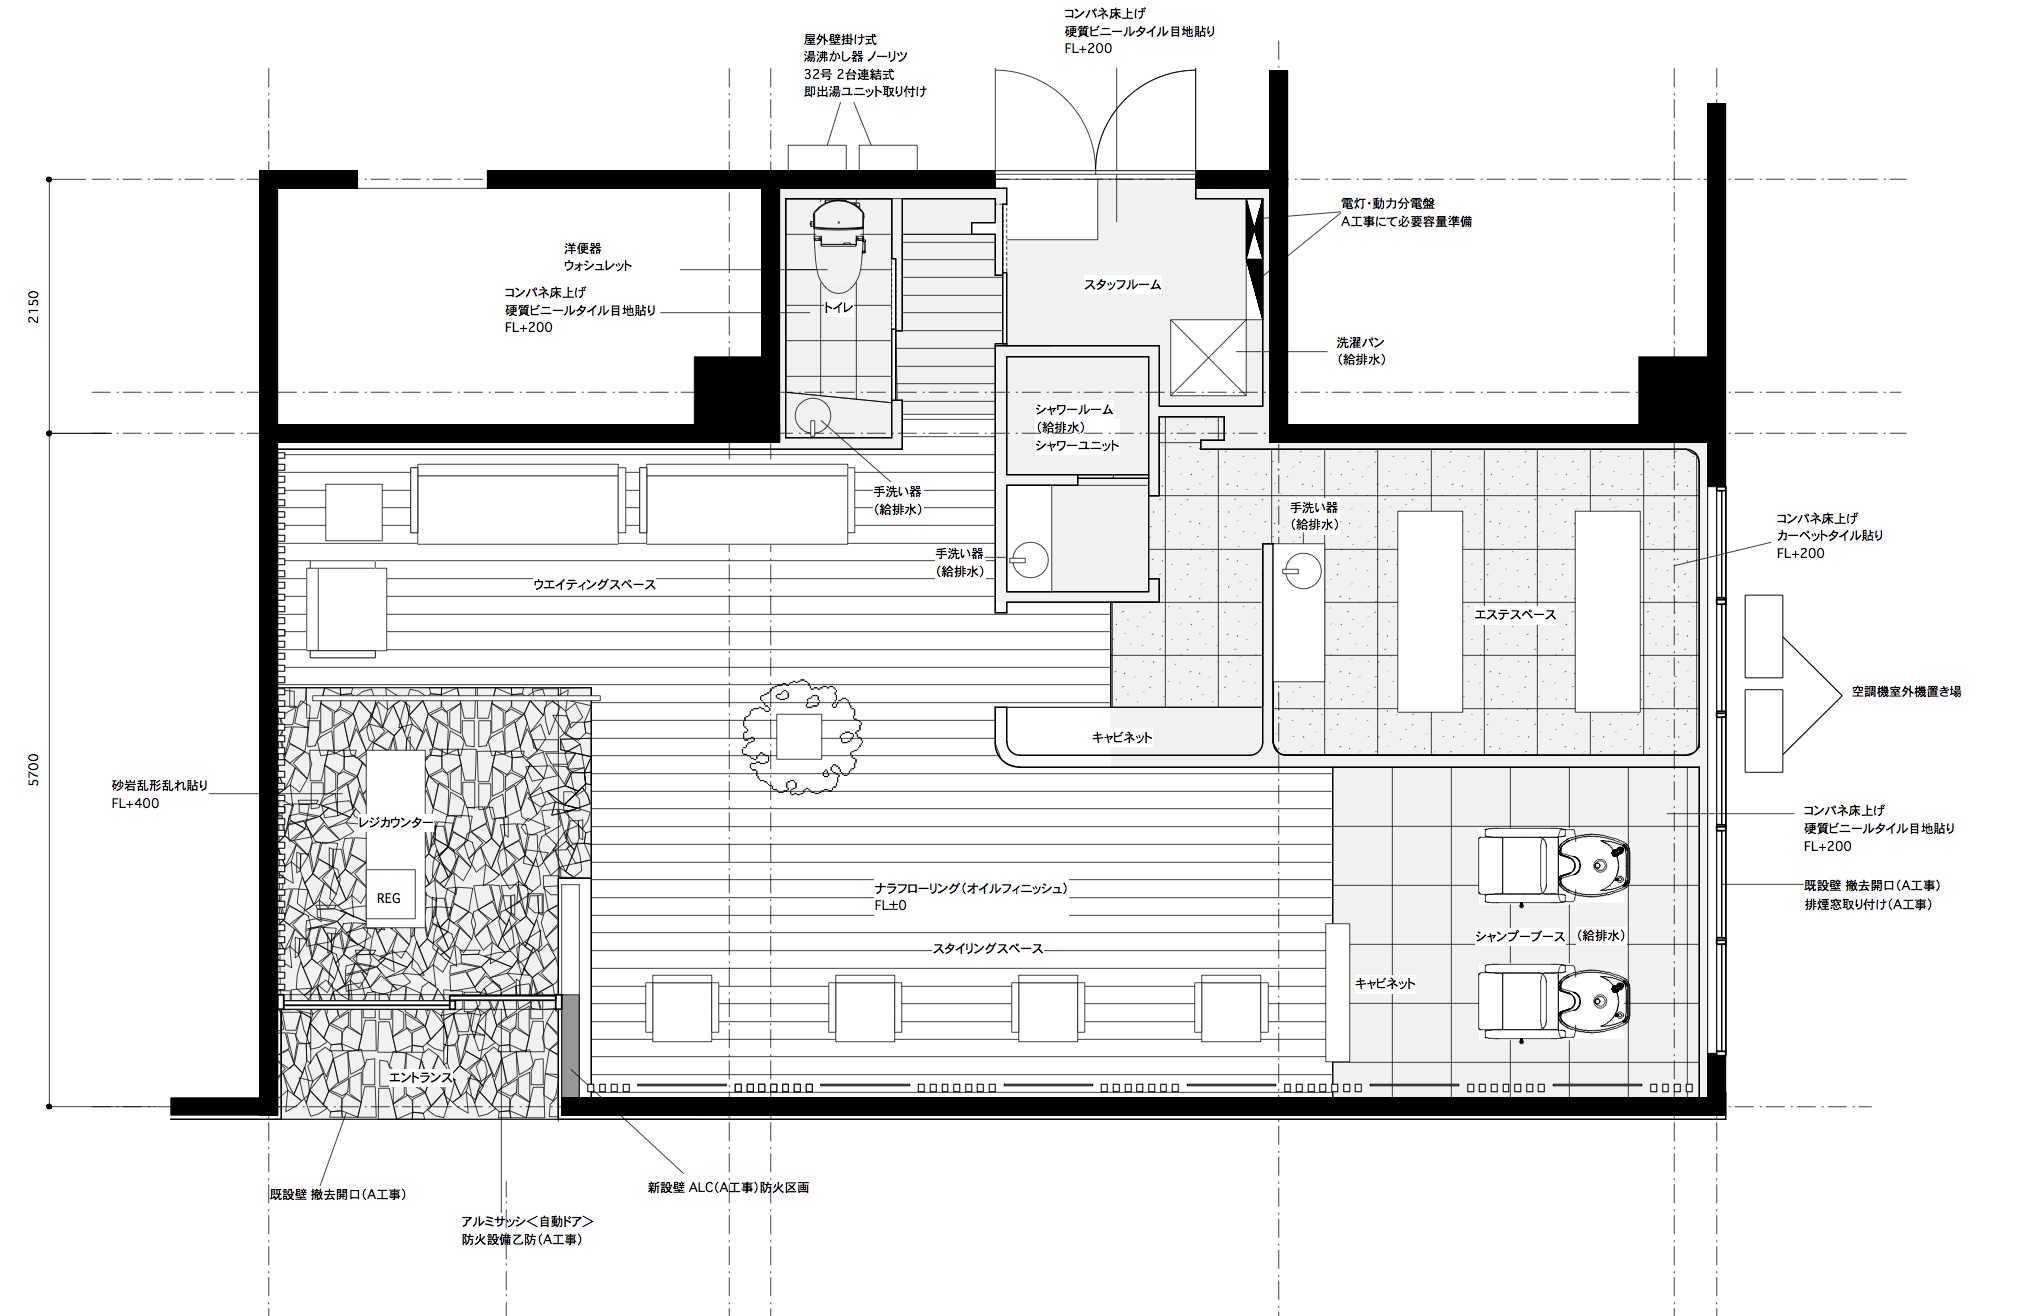 新築飲食店舗の図面等作成 建築設計・CAD・パース作成の仕事の依頼